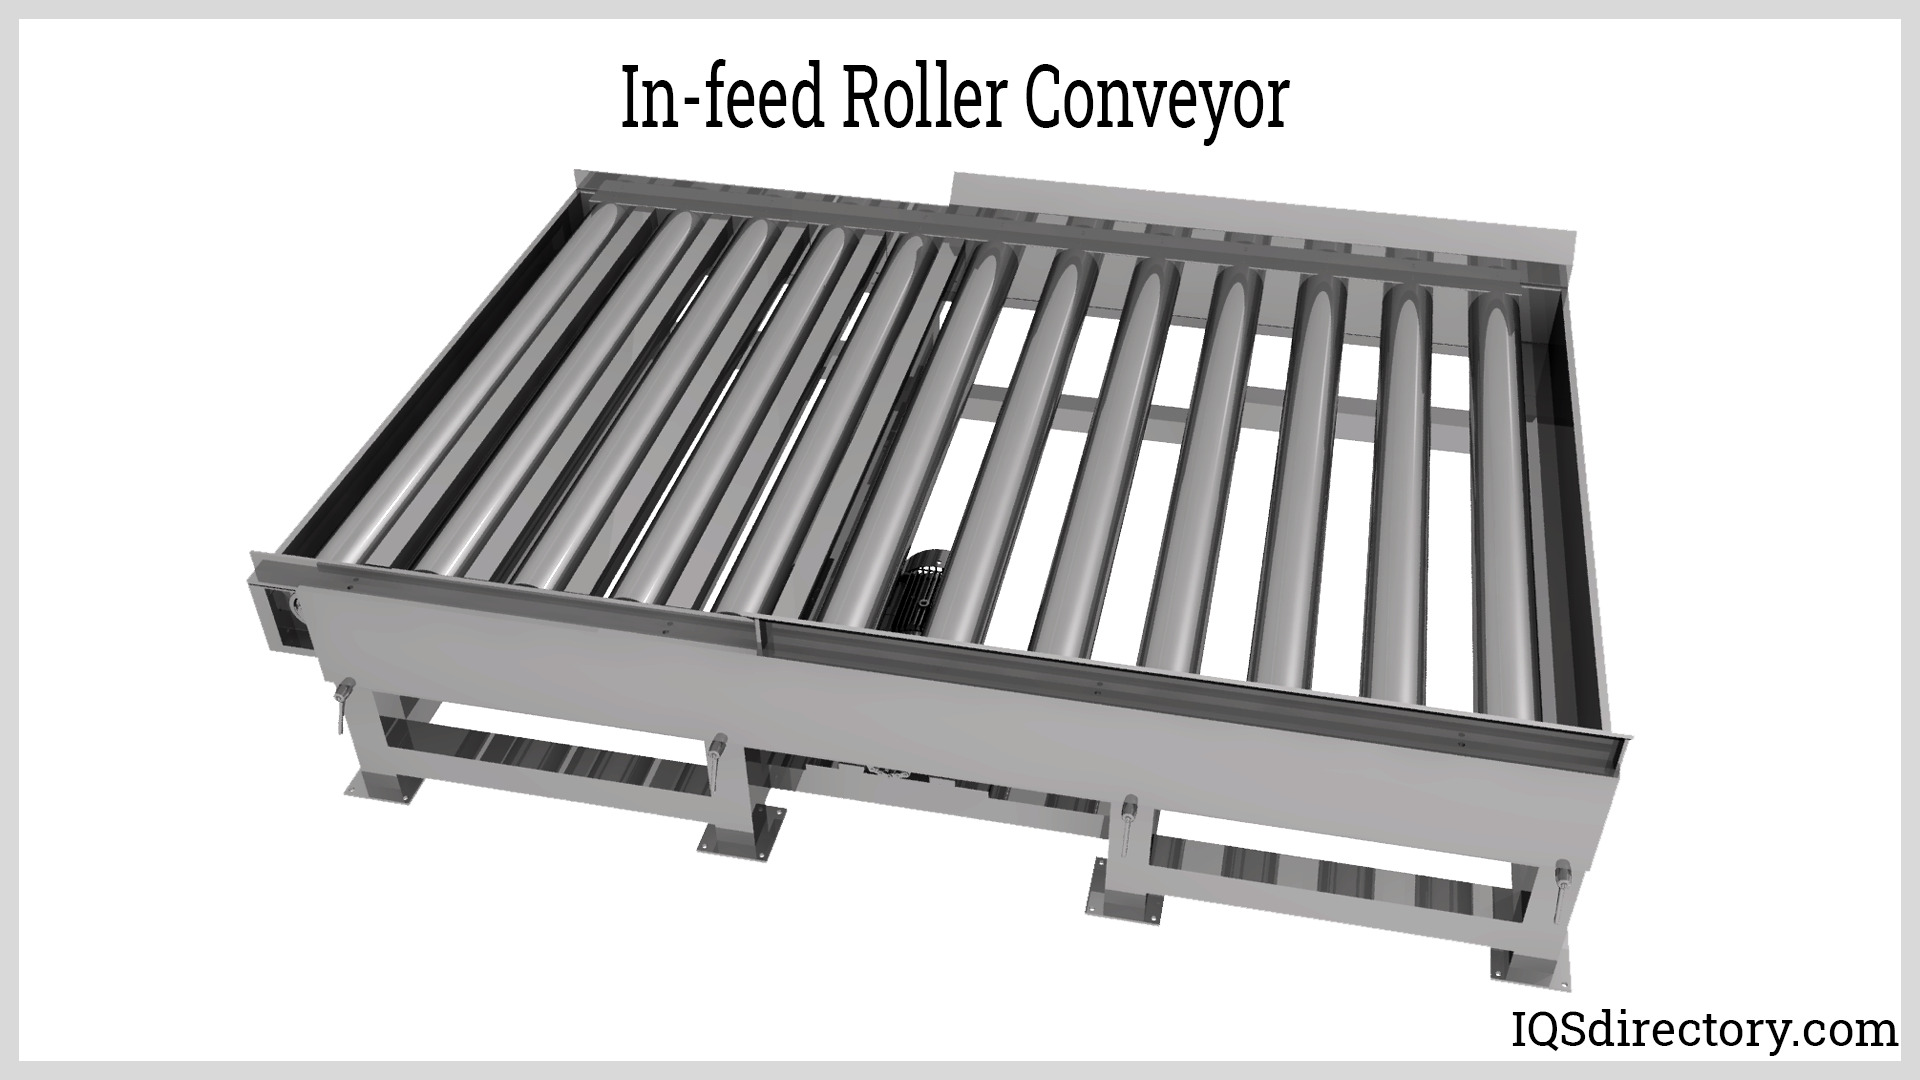 In-feed Roller Conveyor